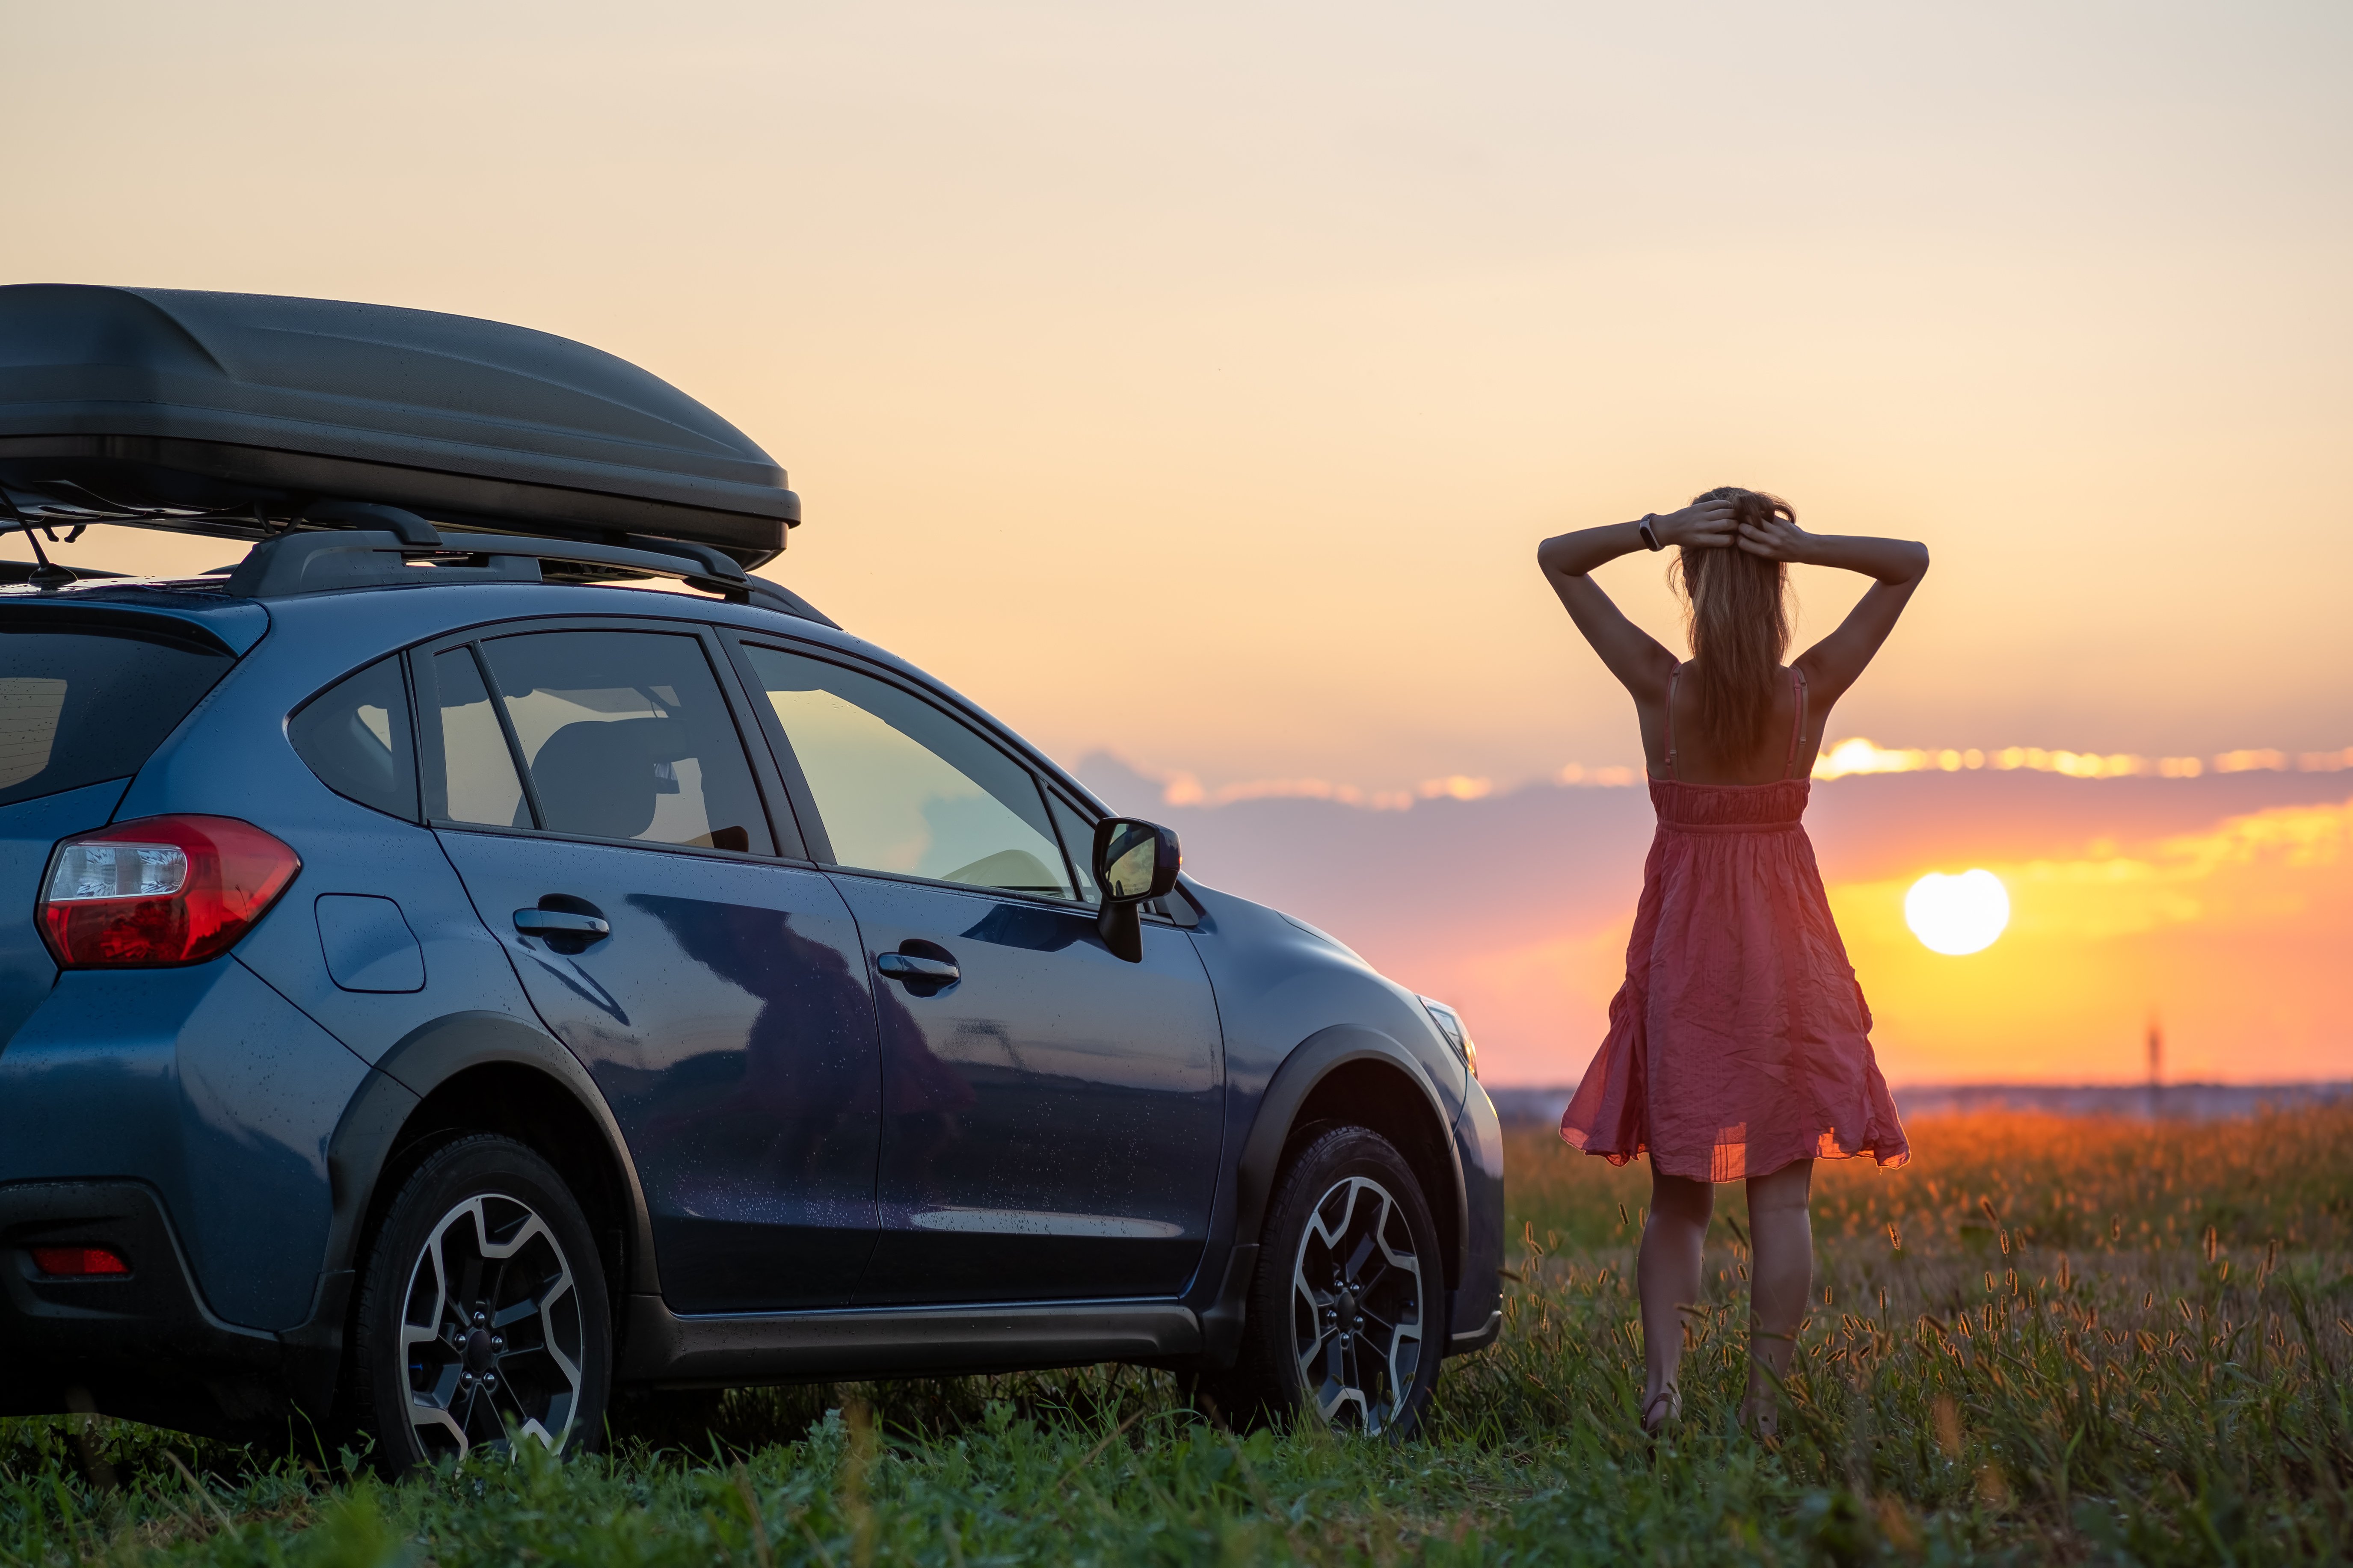 silhouette-female-driver-standing-near-her-car-grassy-field-enjoying-view-bright-sunset